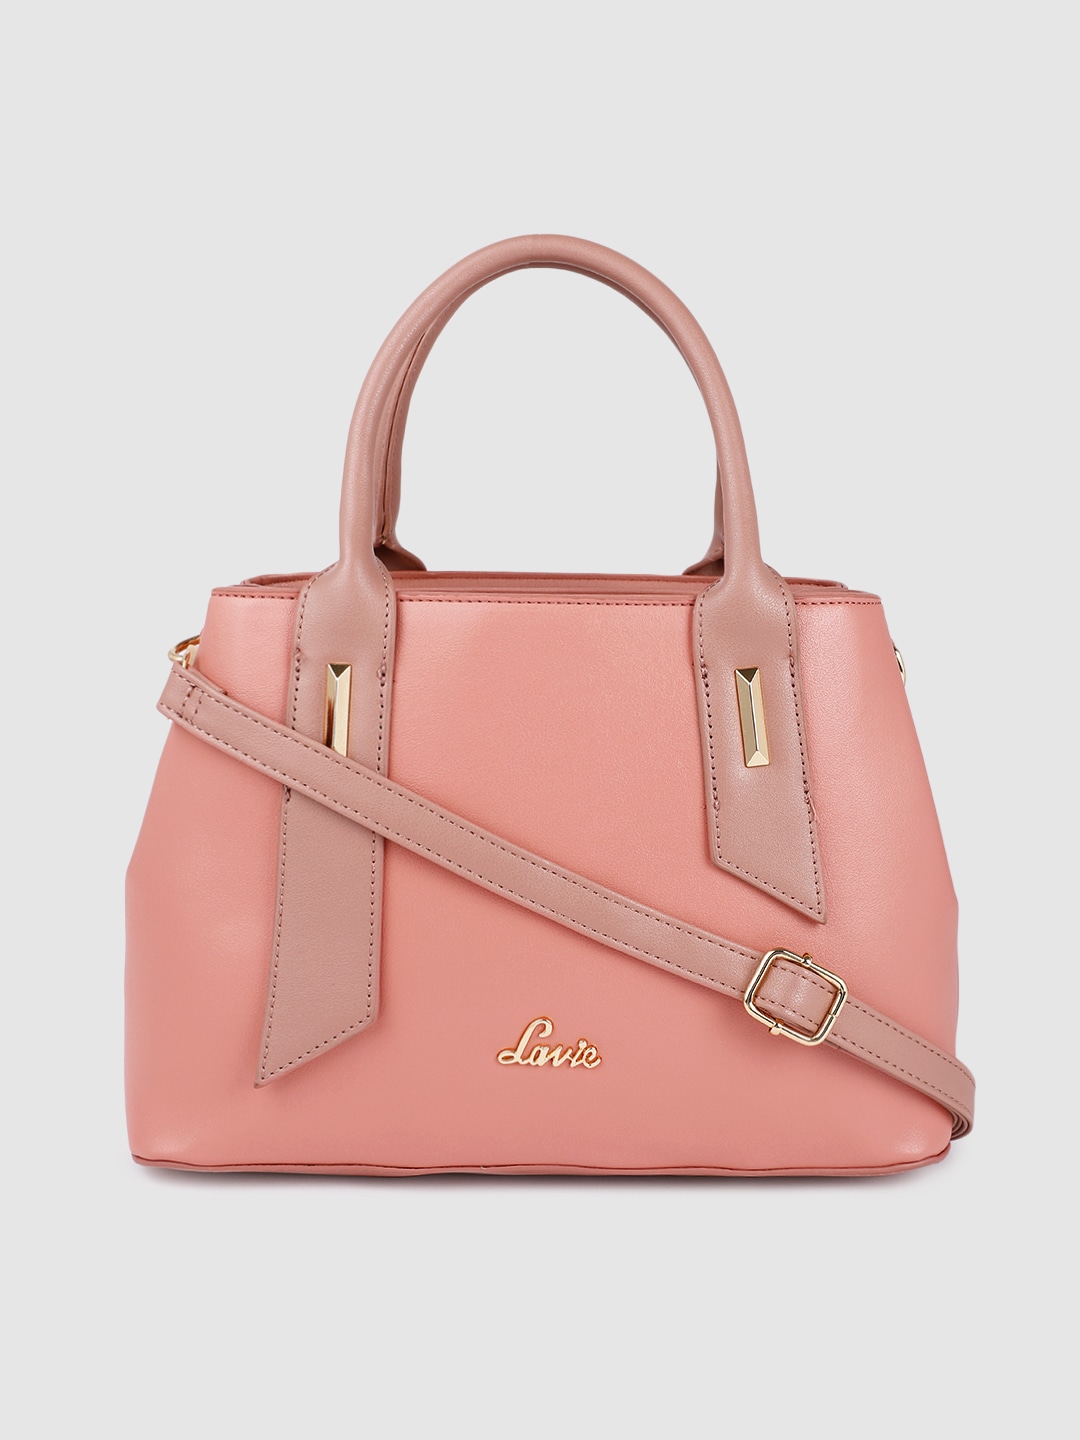 Lavie Pink PU Structured Handheld Bag Price in India